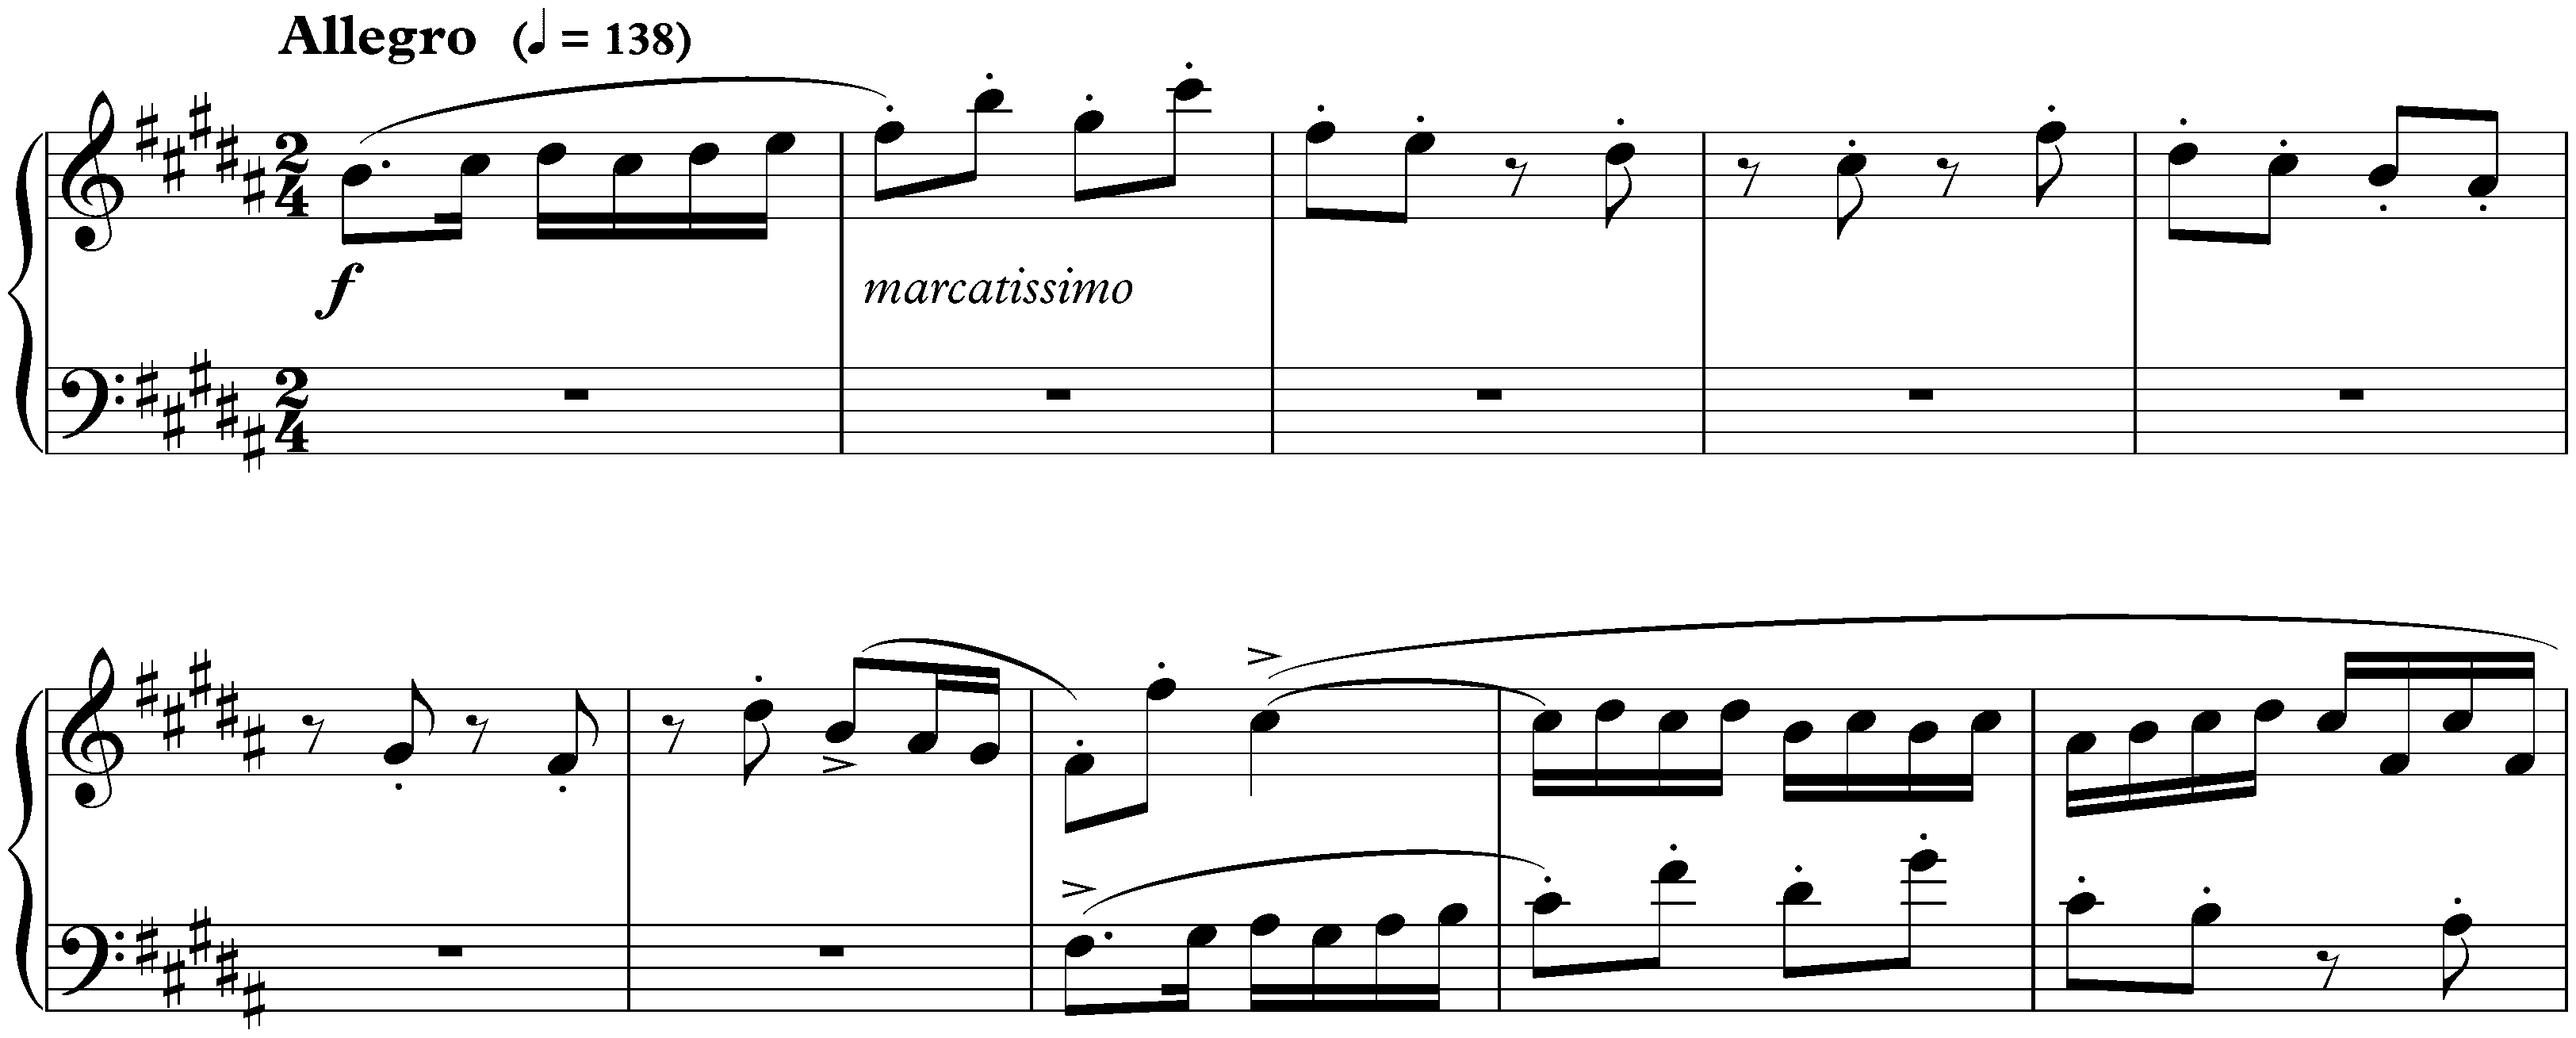 Twenty-four Preludes and Fugues, op. 87; 11. B major, Fugue